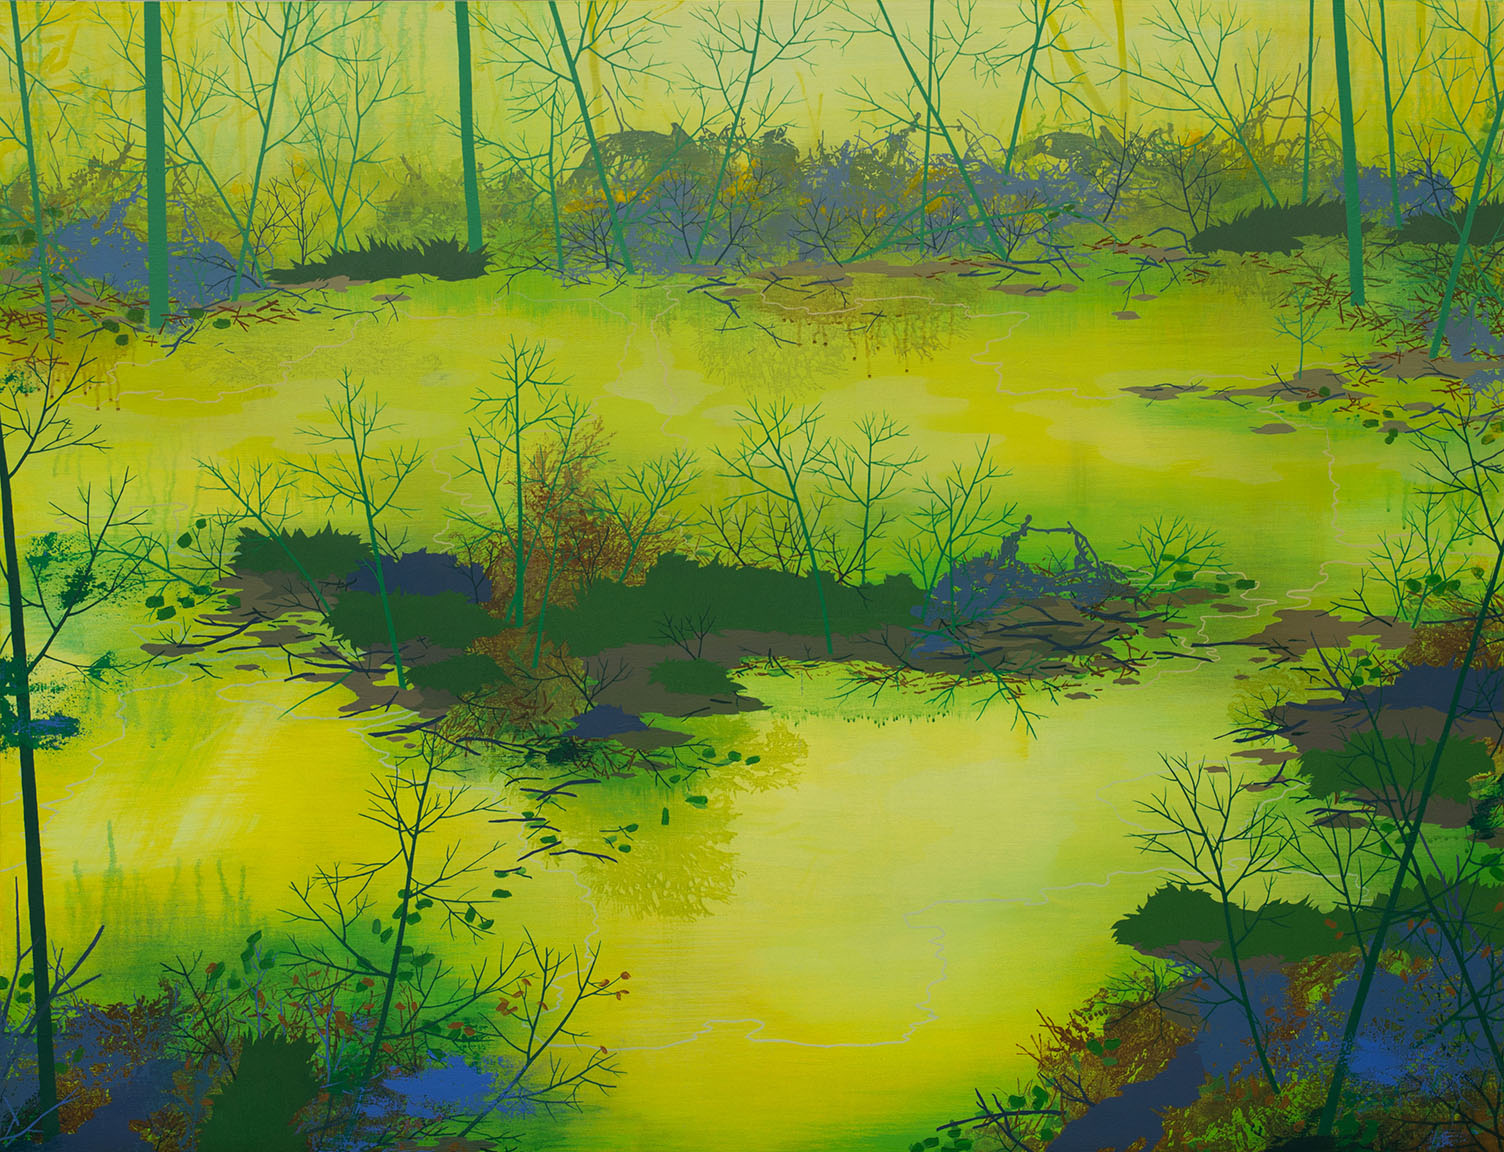   Wilderness   Acrylic on canvas 46 x 60 x 1.5" SOLD &nbsp; 